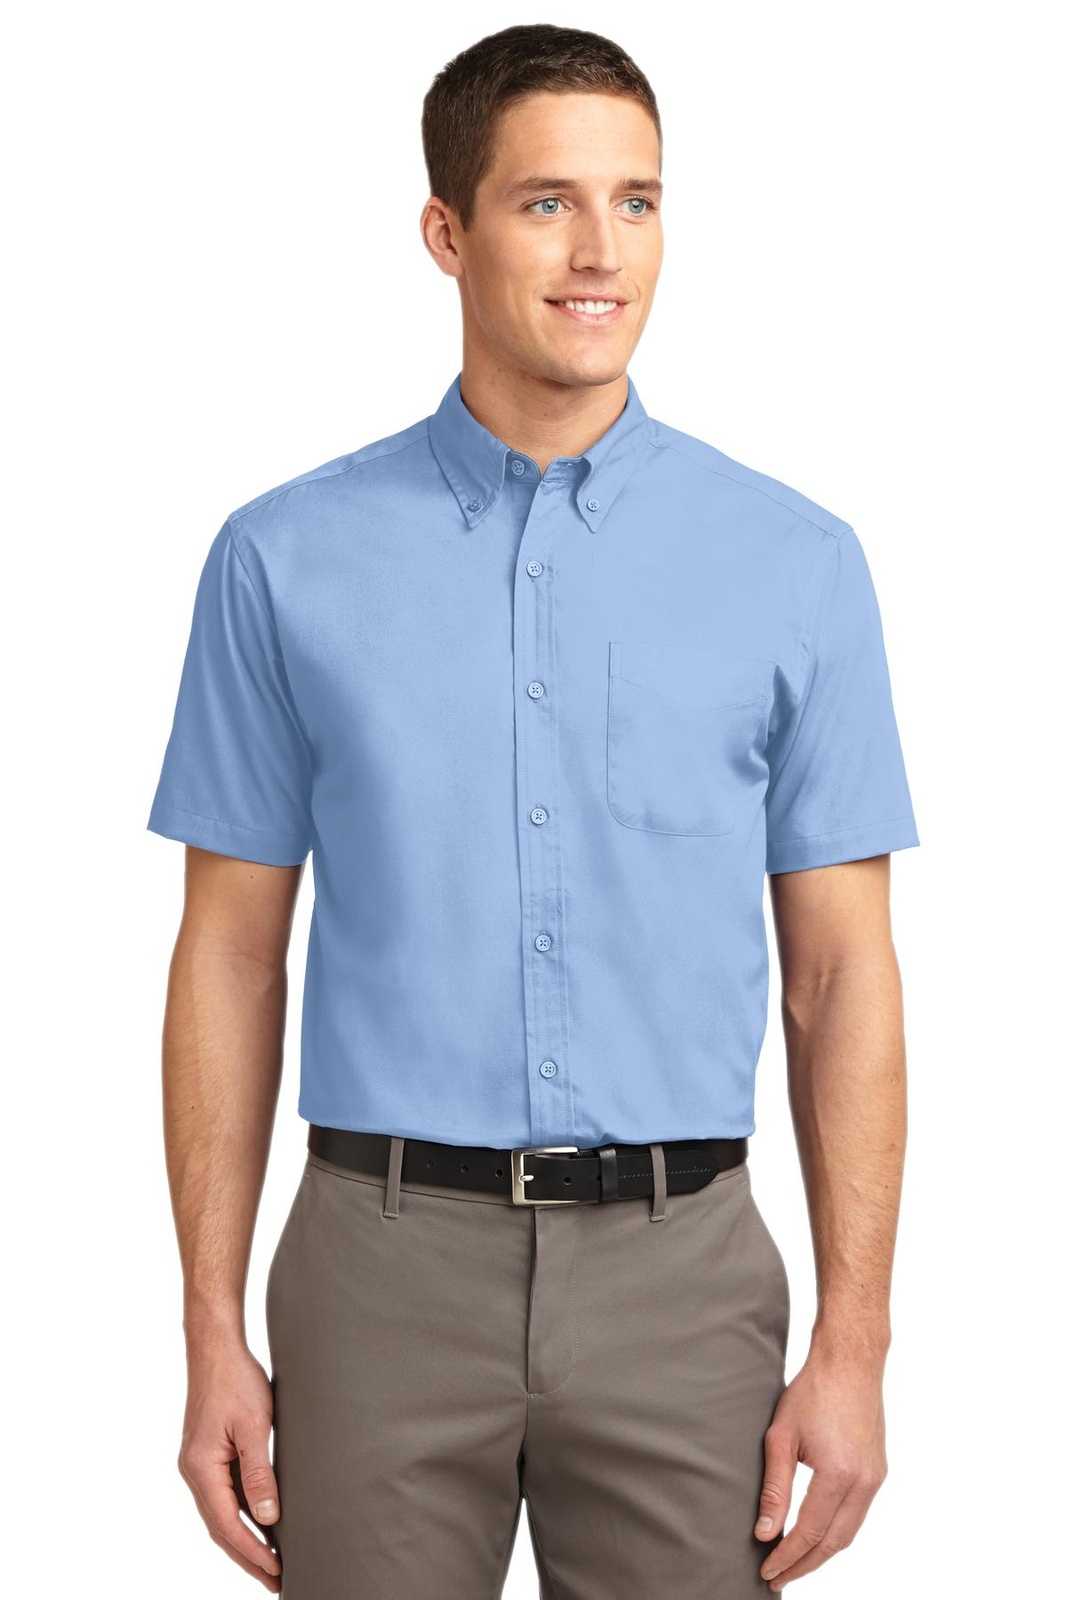 Port Authority S508 Short Sleeve Easy Care Shirt - Light Blue Light Stone - HIT a Double - 1